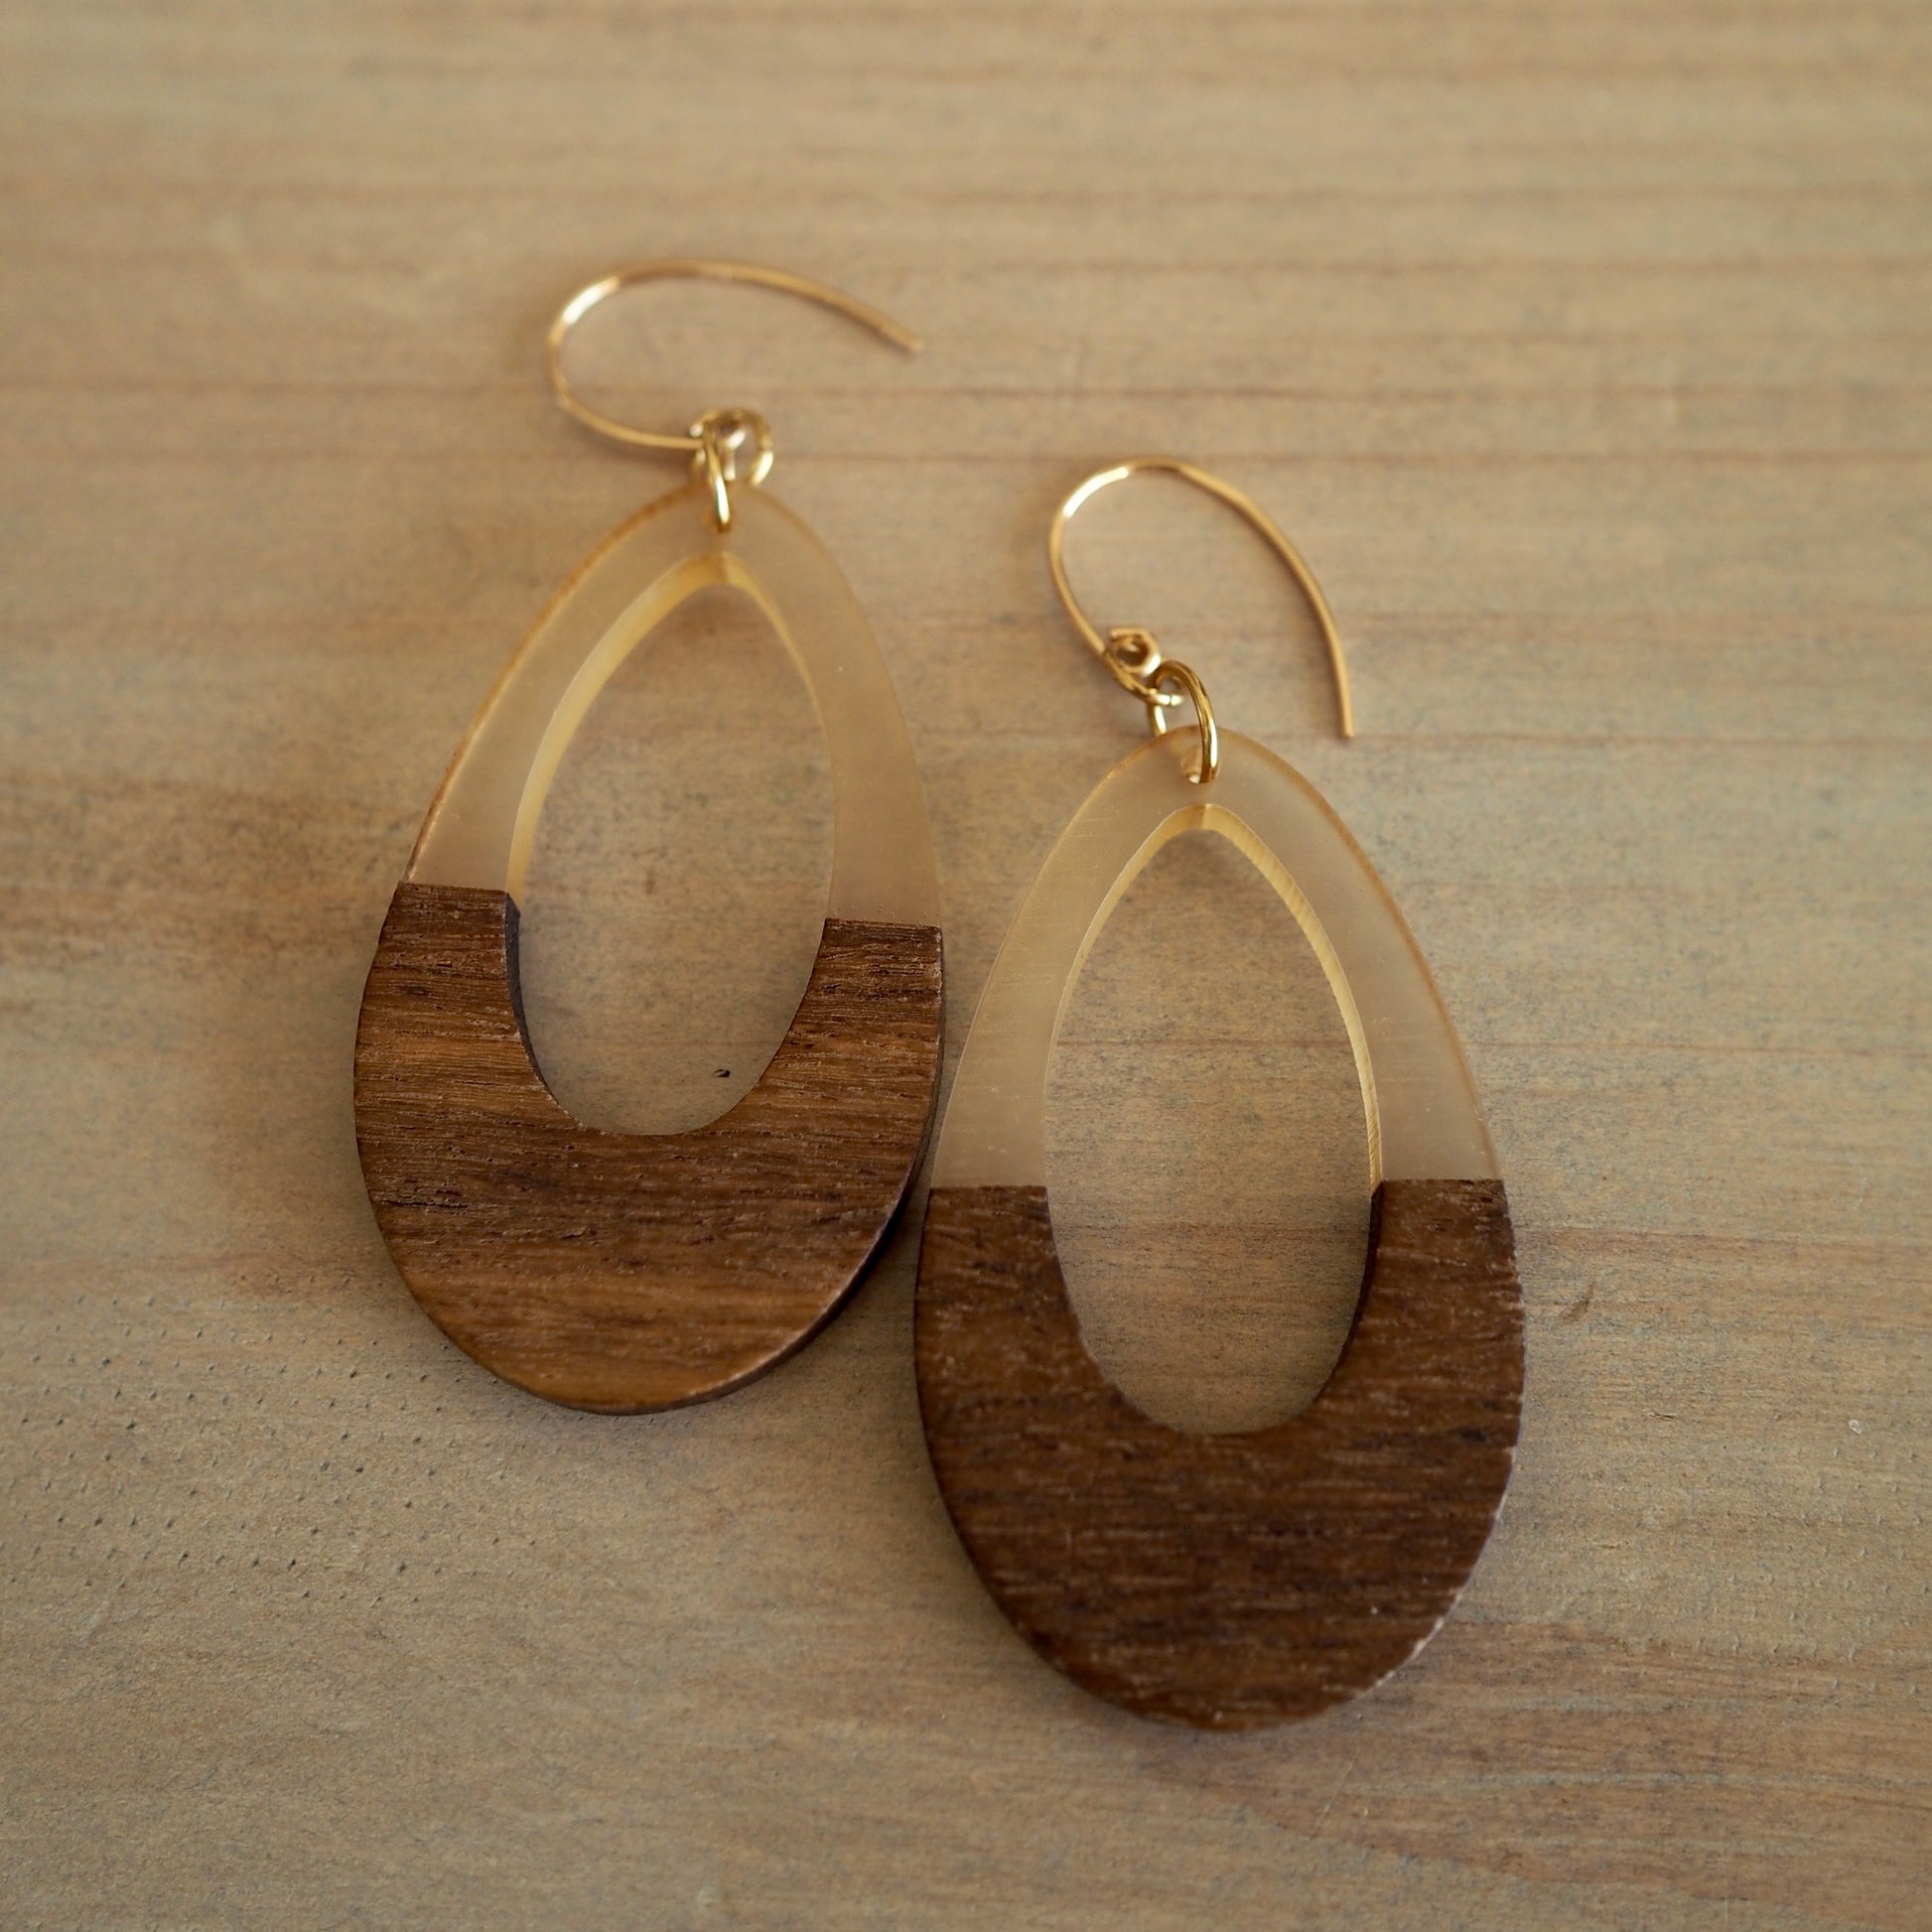 Large Teardrop Earrings with Wood and Resin by Wallis Designs